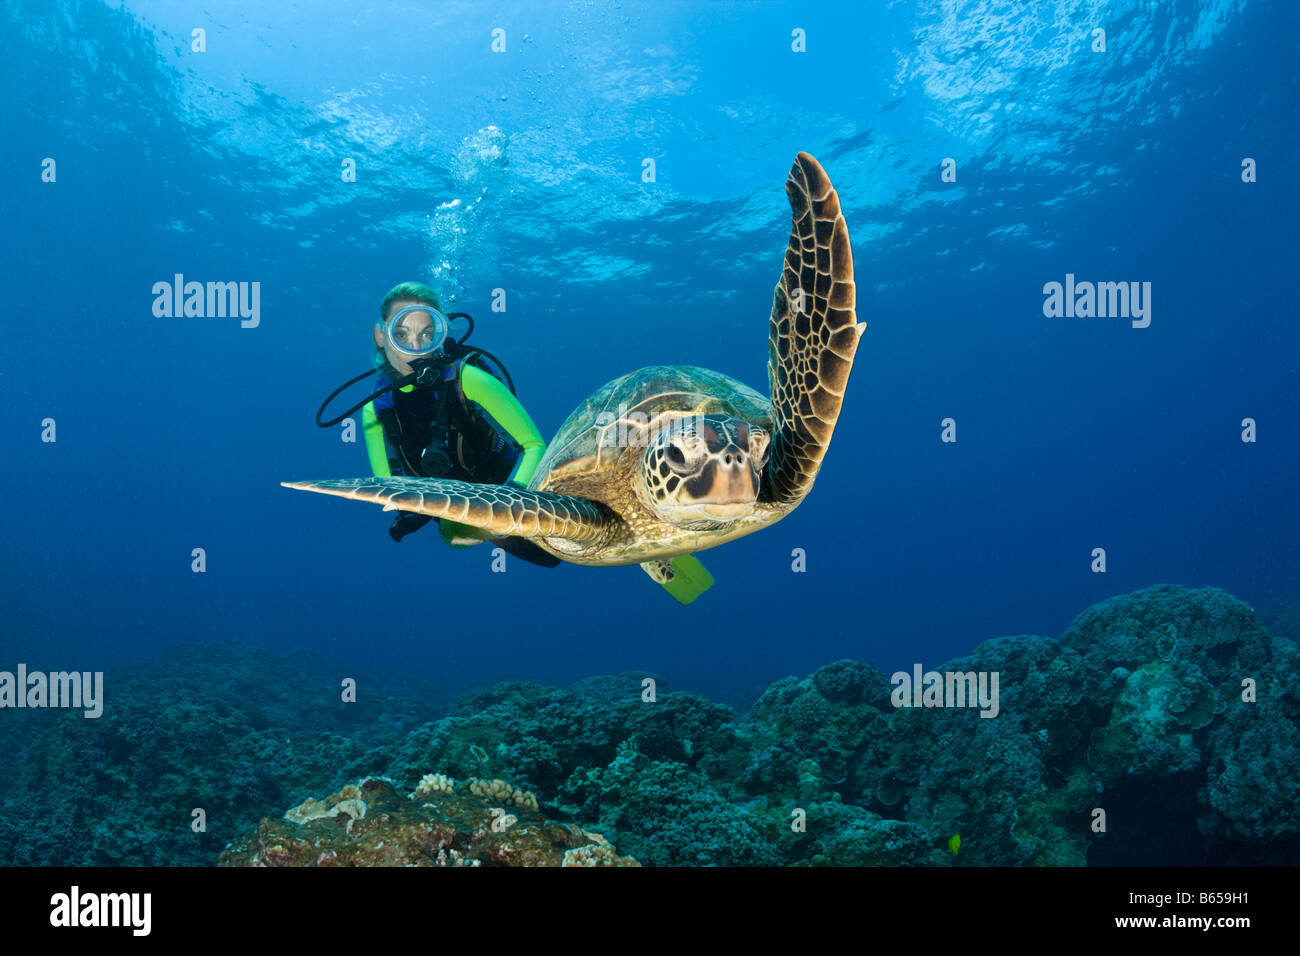 Grüne Schildkröte und Taucher Chelonia Mydas Maui Hawaii USA Stockfoto